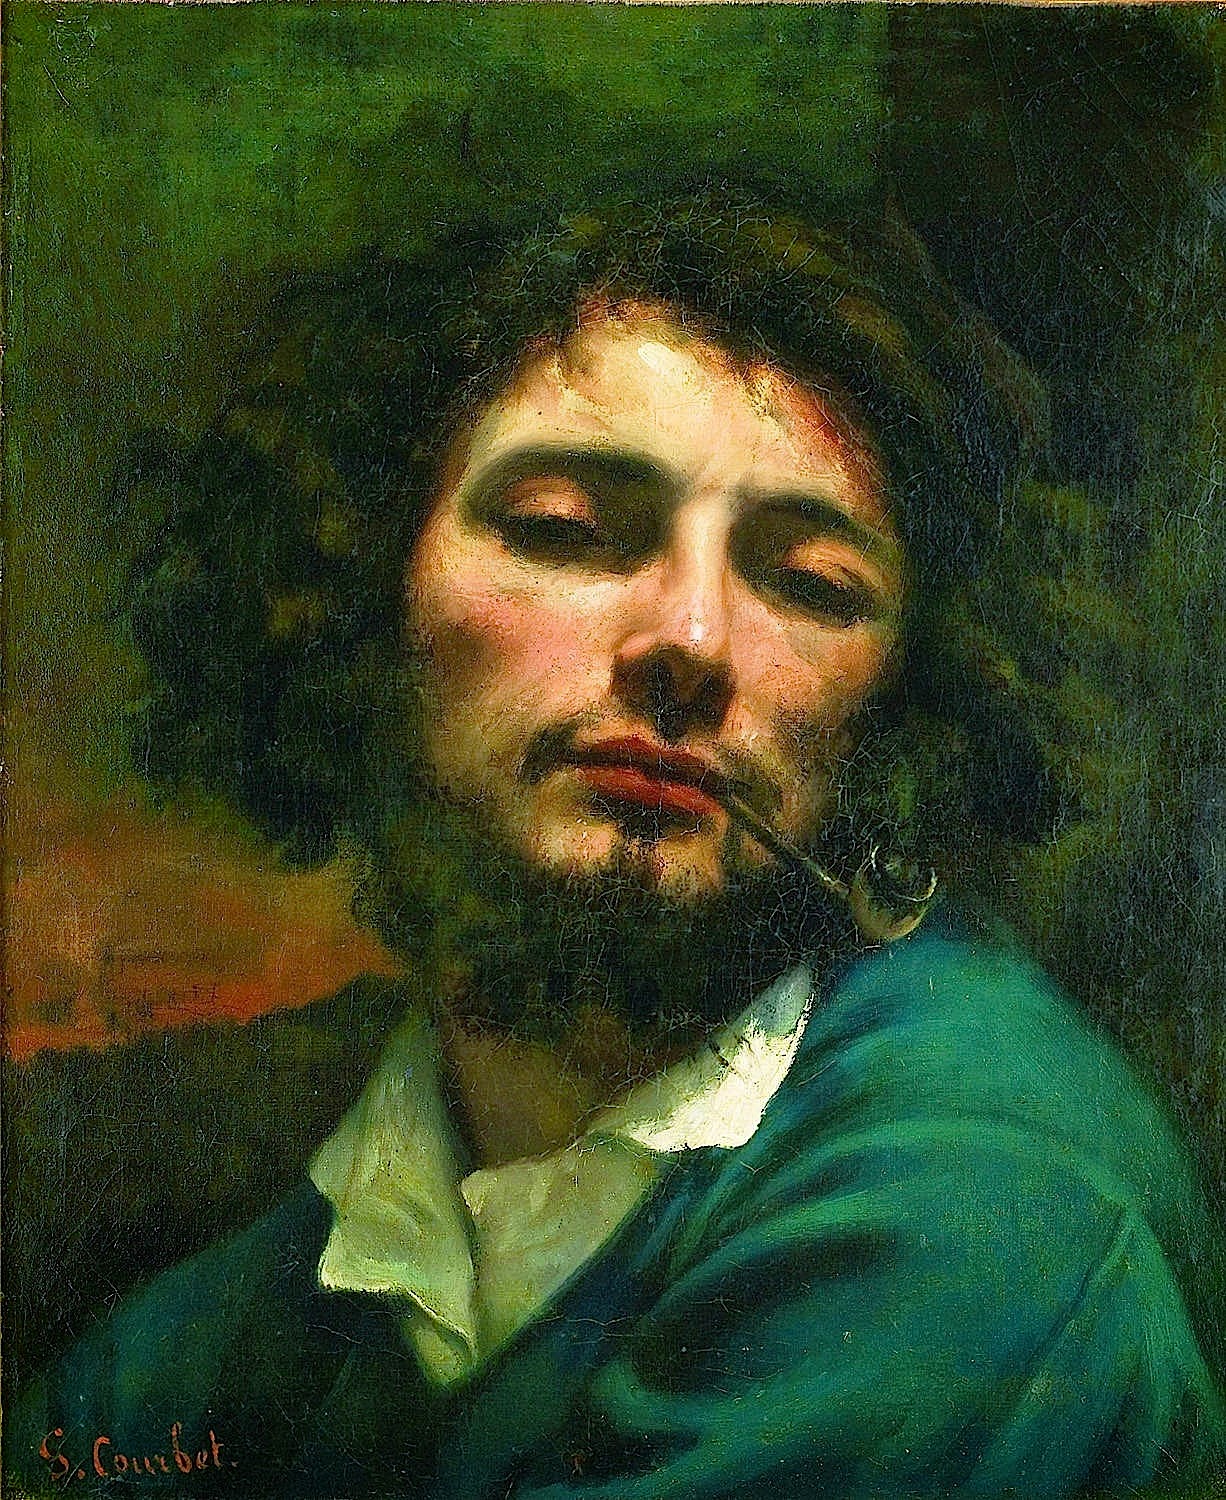 Gustave+Courbet-1819-1877 (26).jpg